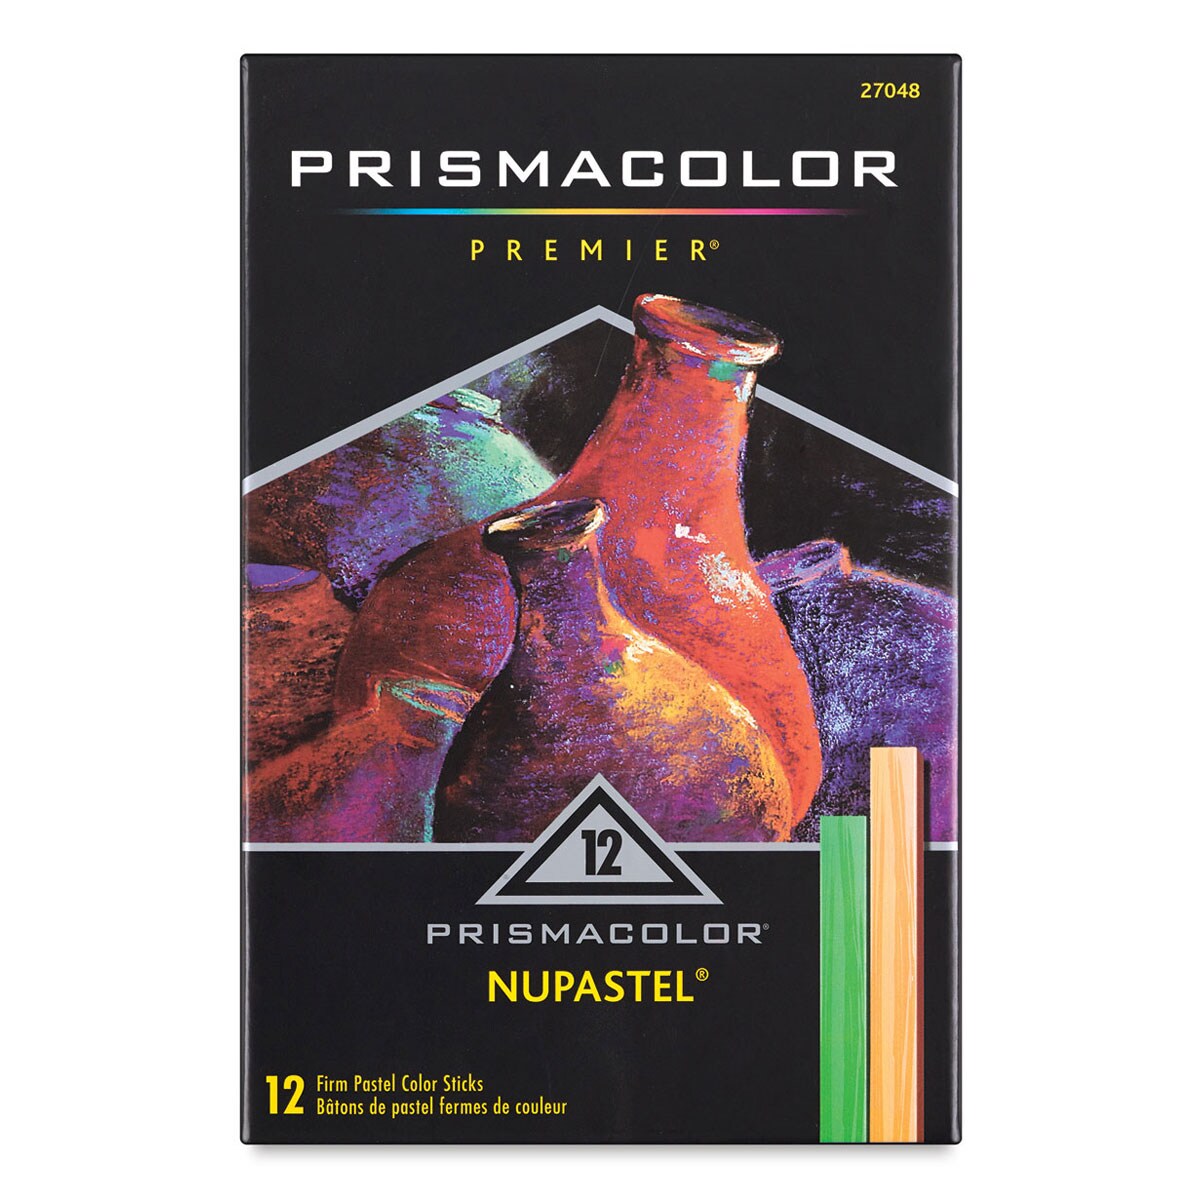 Prismacolor Premier NuPastel Color Sticks - Assorted Colors, Set of 12